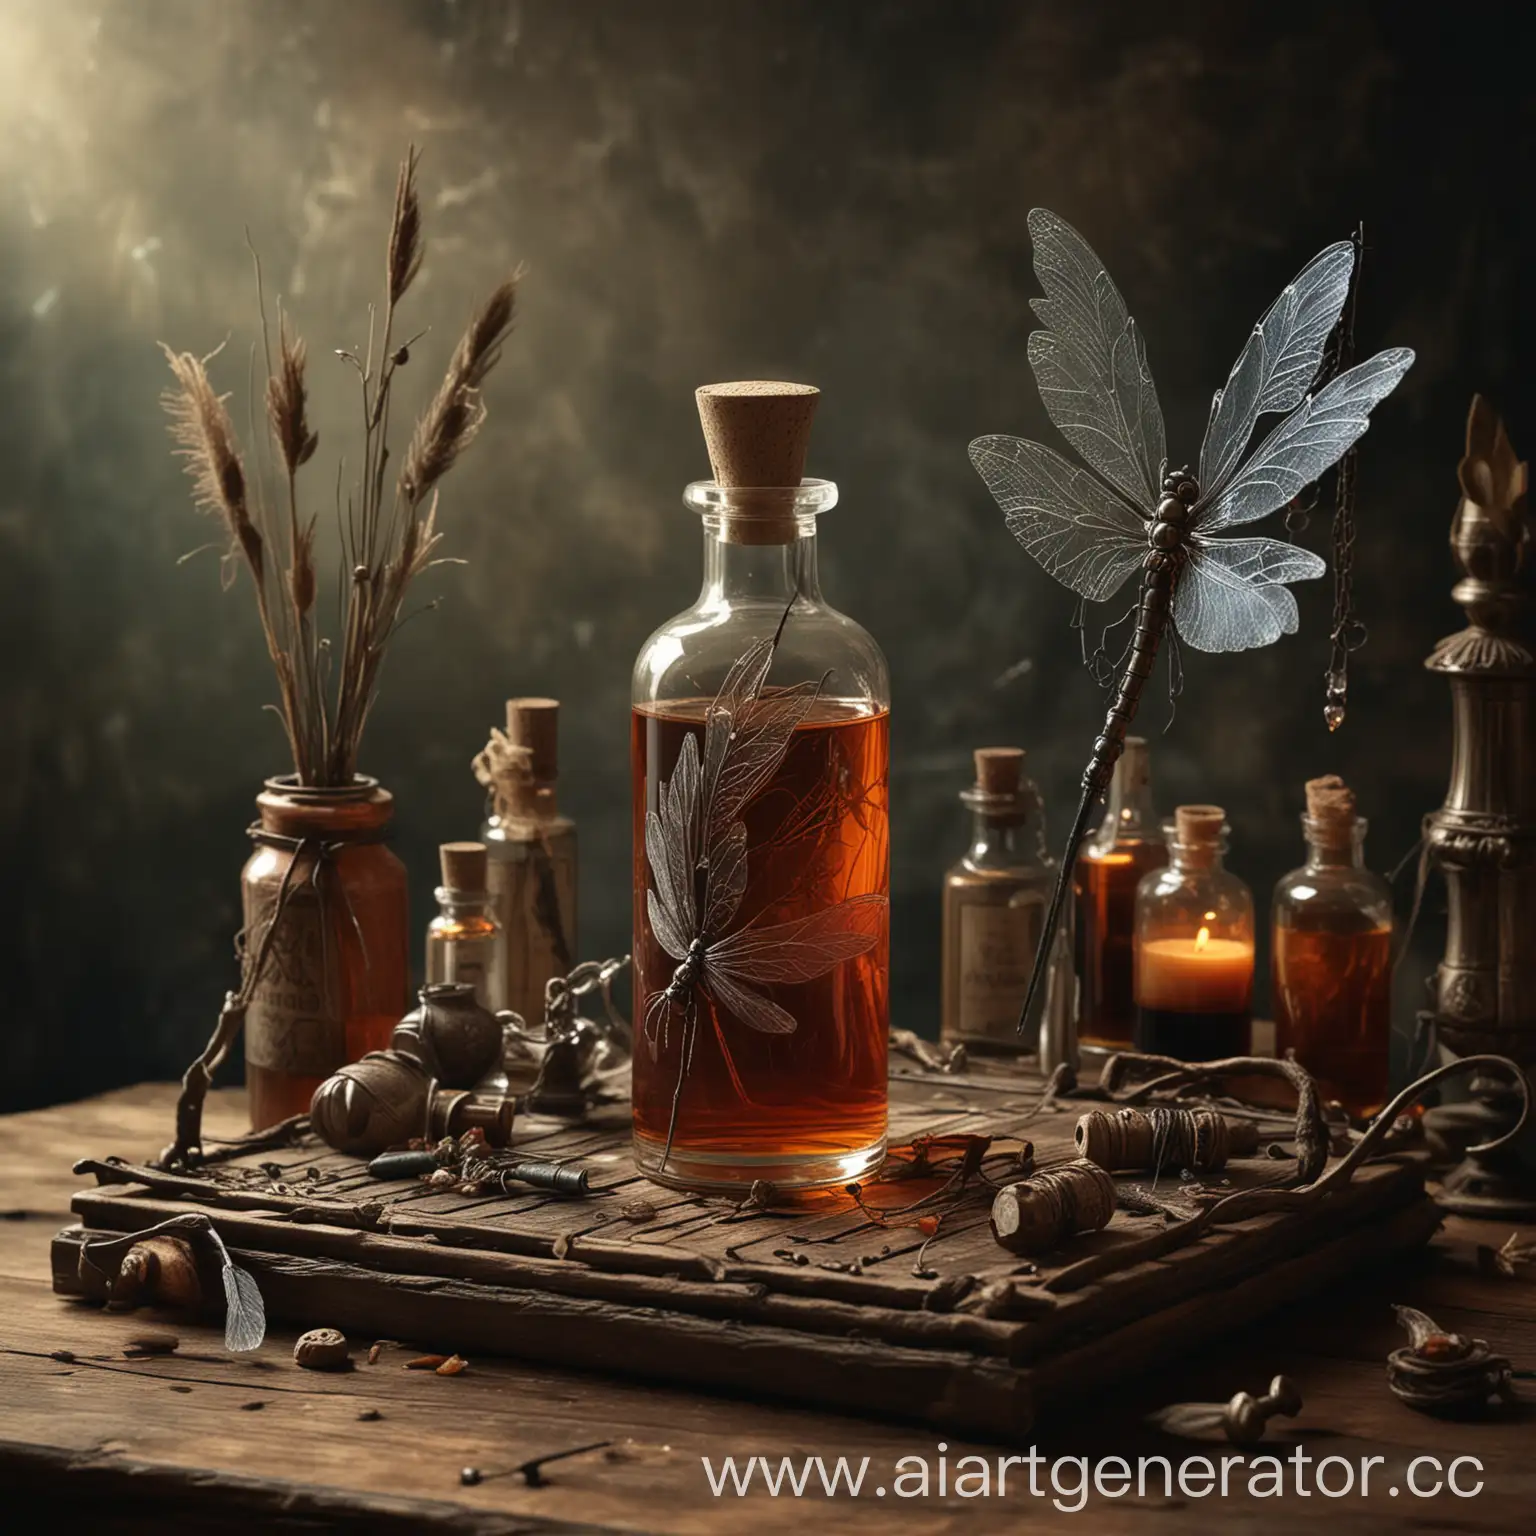 magic elixir elegance bottle with dragonfly wings on rack on table with witch stuff. fantasy,
fine oil art. dariusz zawadzki style. hyperdetalization. view from side,